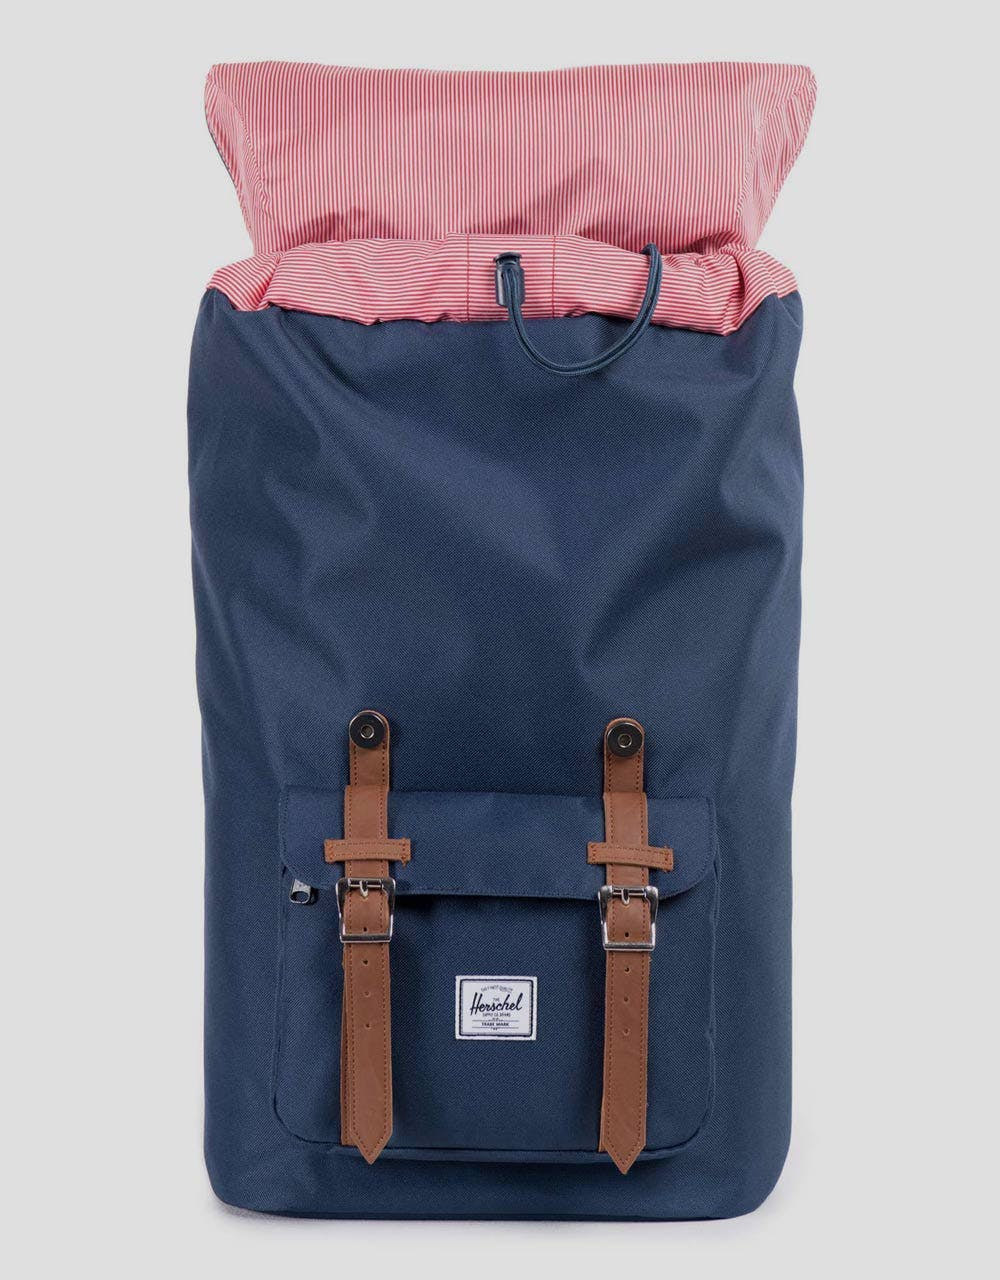 Herschel Supply Co. Little America Backpack - Navy/Tan